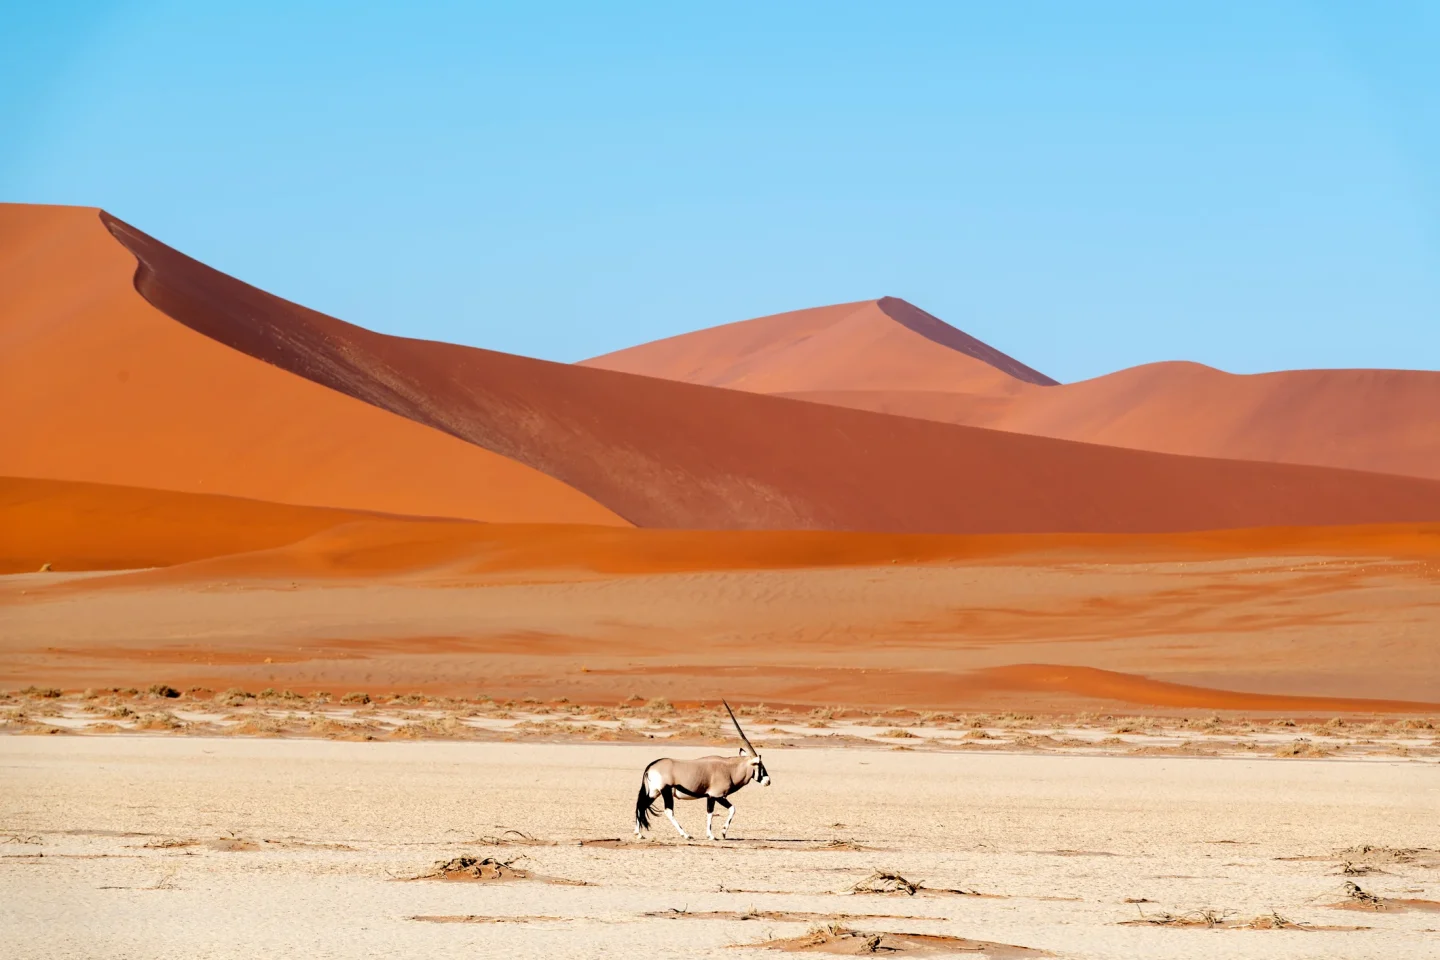 An oryx in the Namib Desert in Namibia.